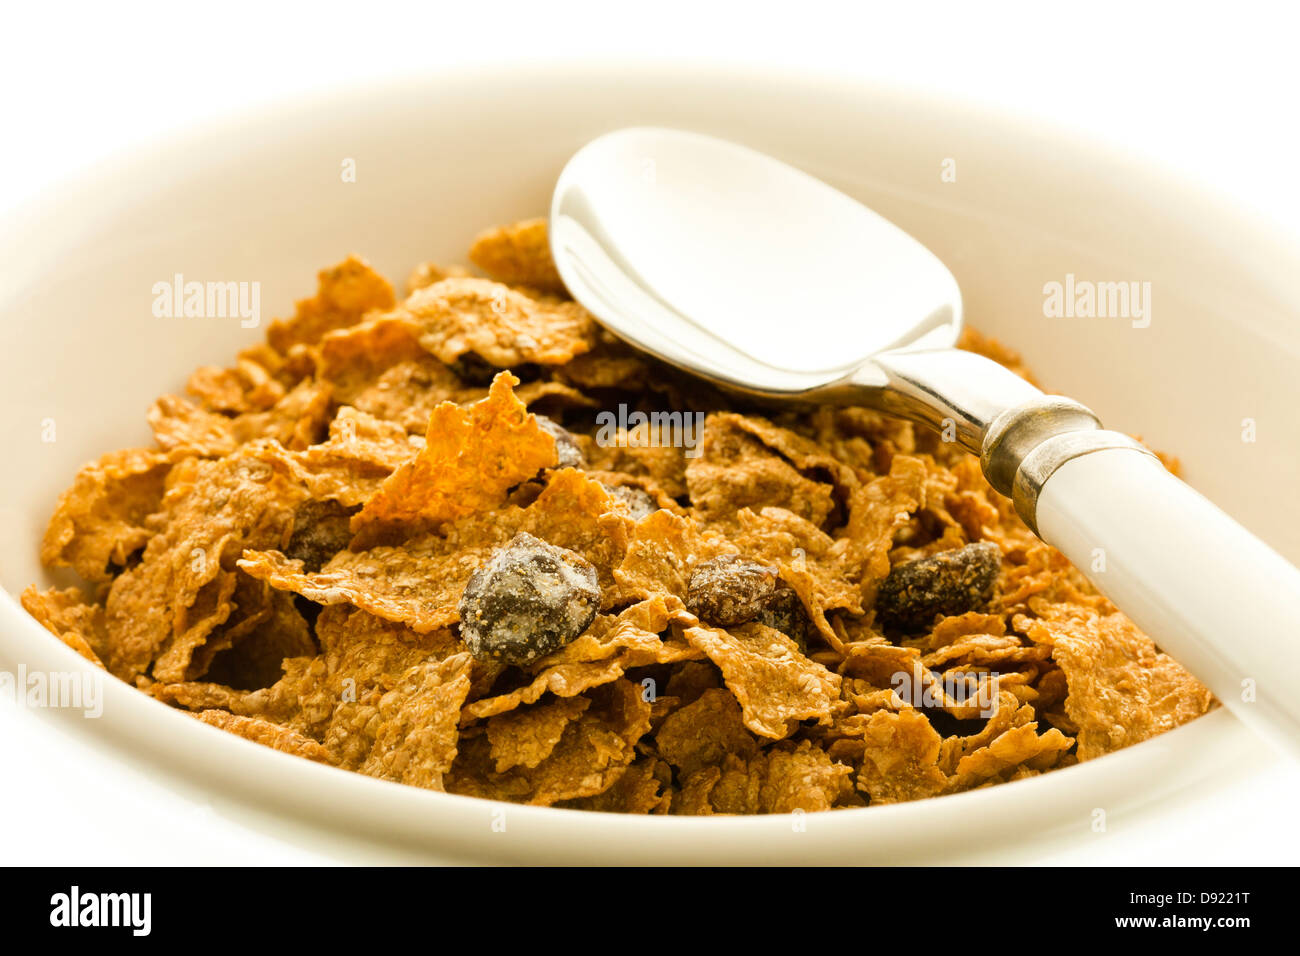 Bowl of raisin bran cereal Stock Photo